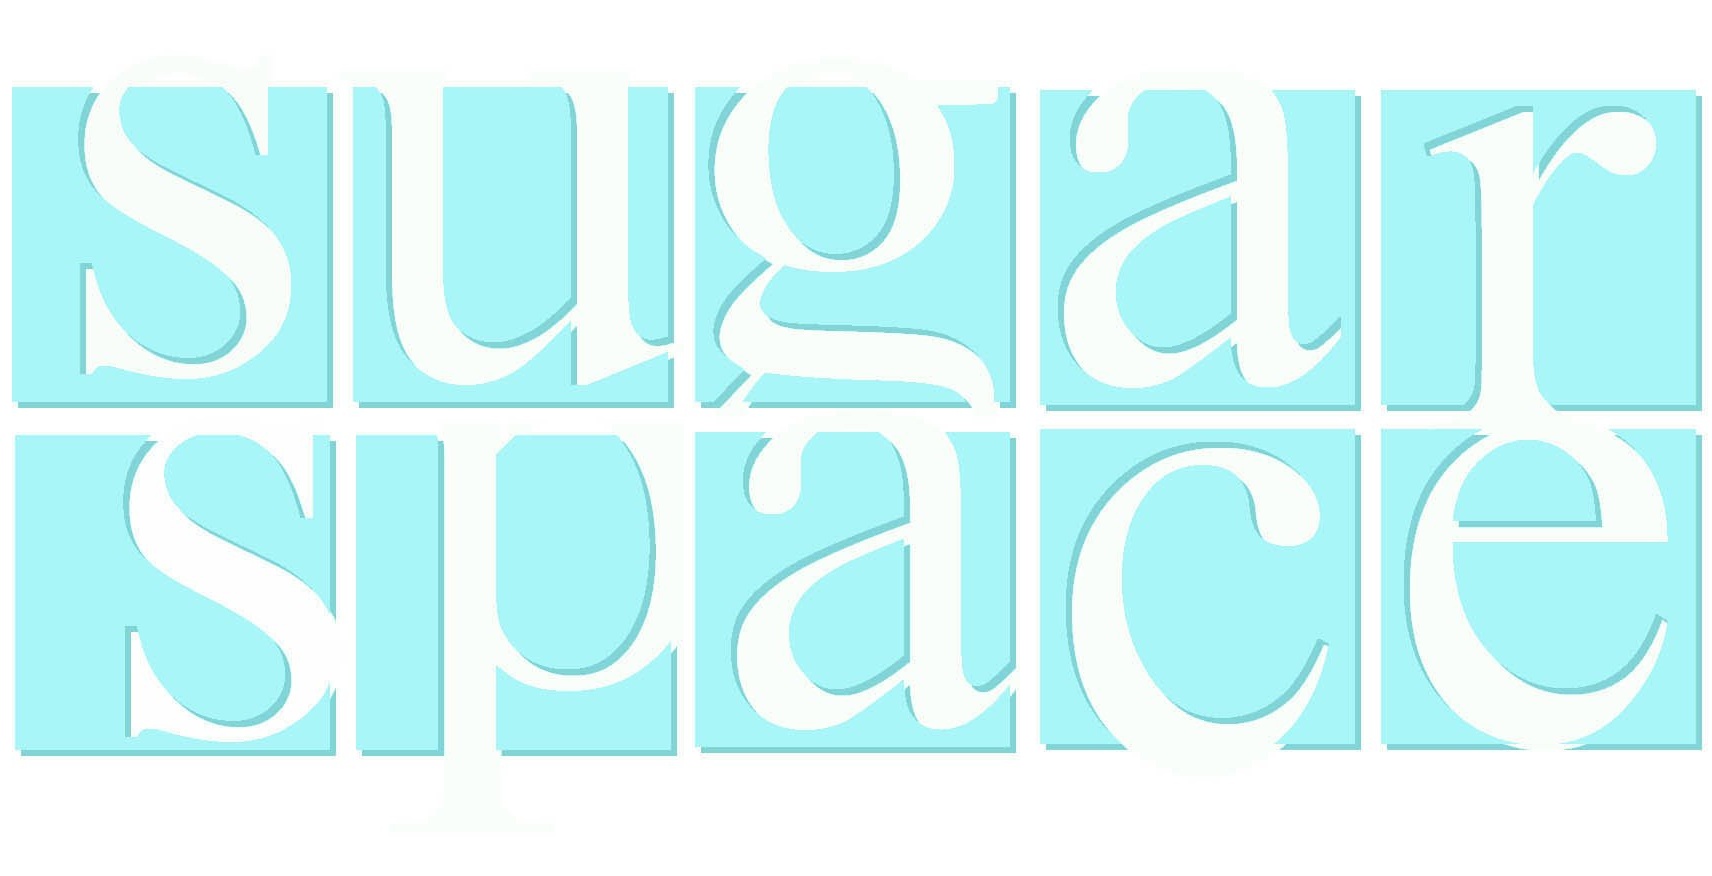 Sugar Space Arts Warehouse